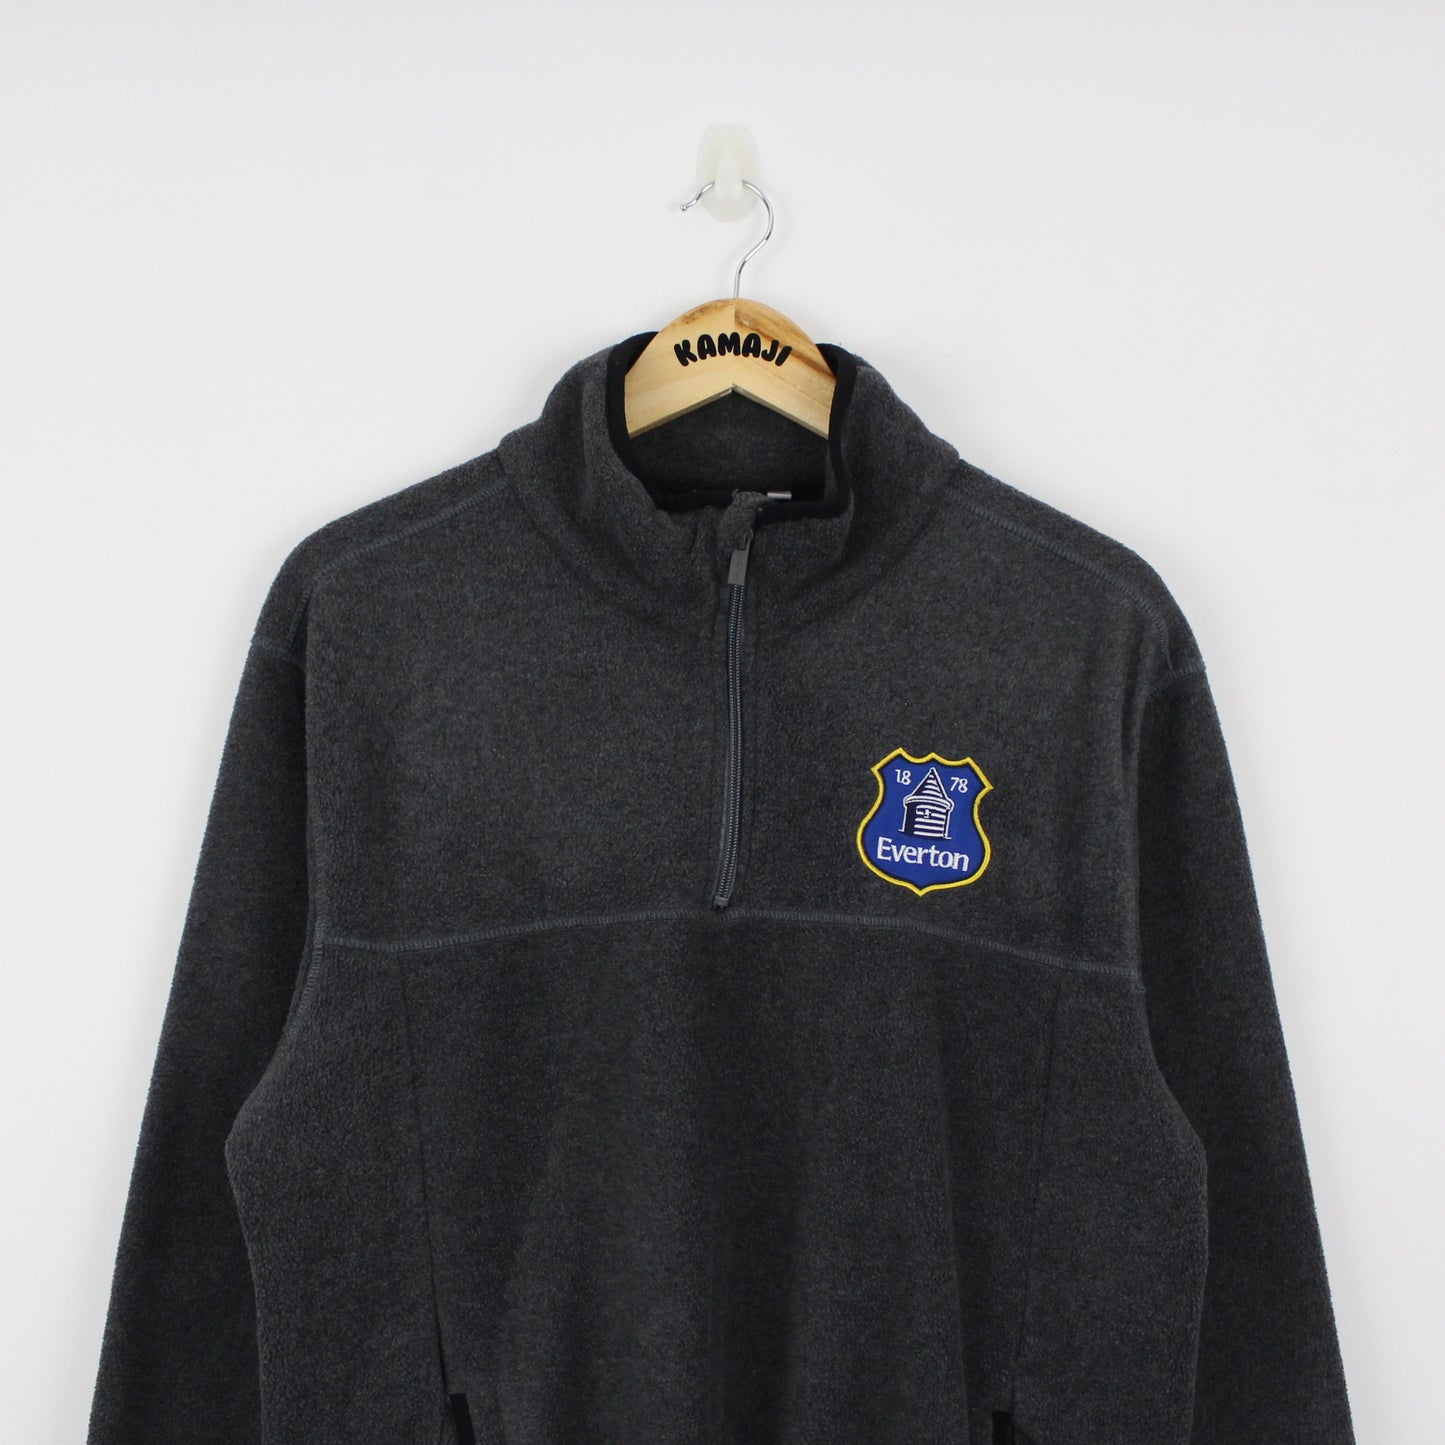 Everton Football Club Grey Quarter Zip Fleece (L)